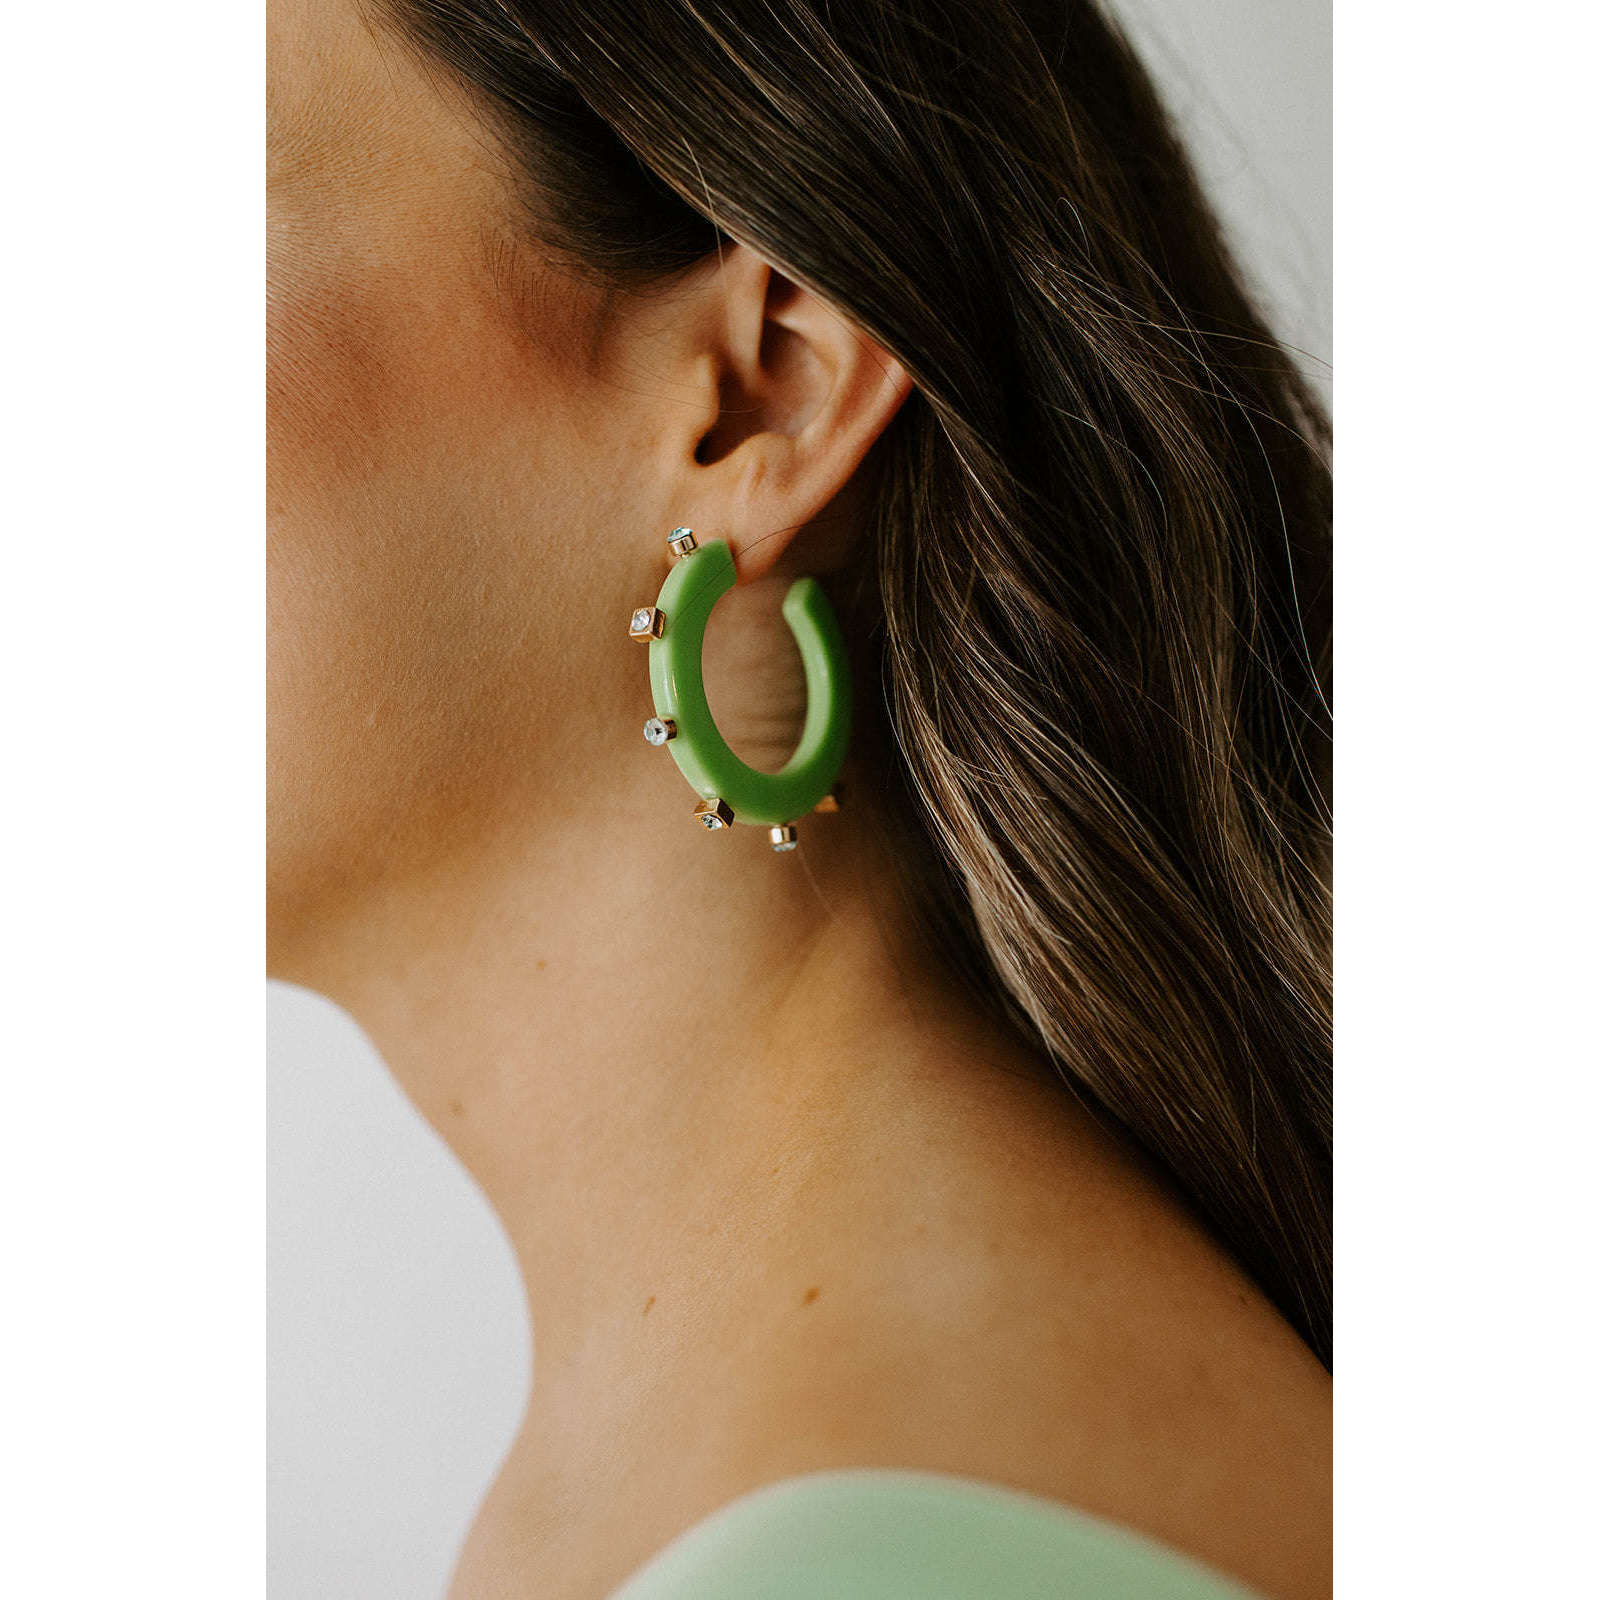 8.28 Boutique:Smith & Co. Jewel Design,Smith & Co. Jewel Design Small City Girl  Hoop Earrings,Earrings